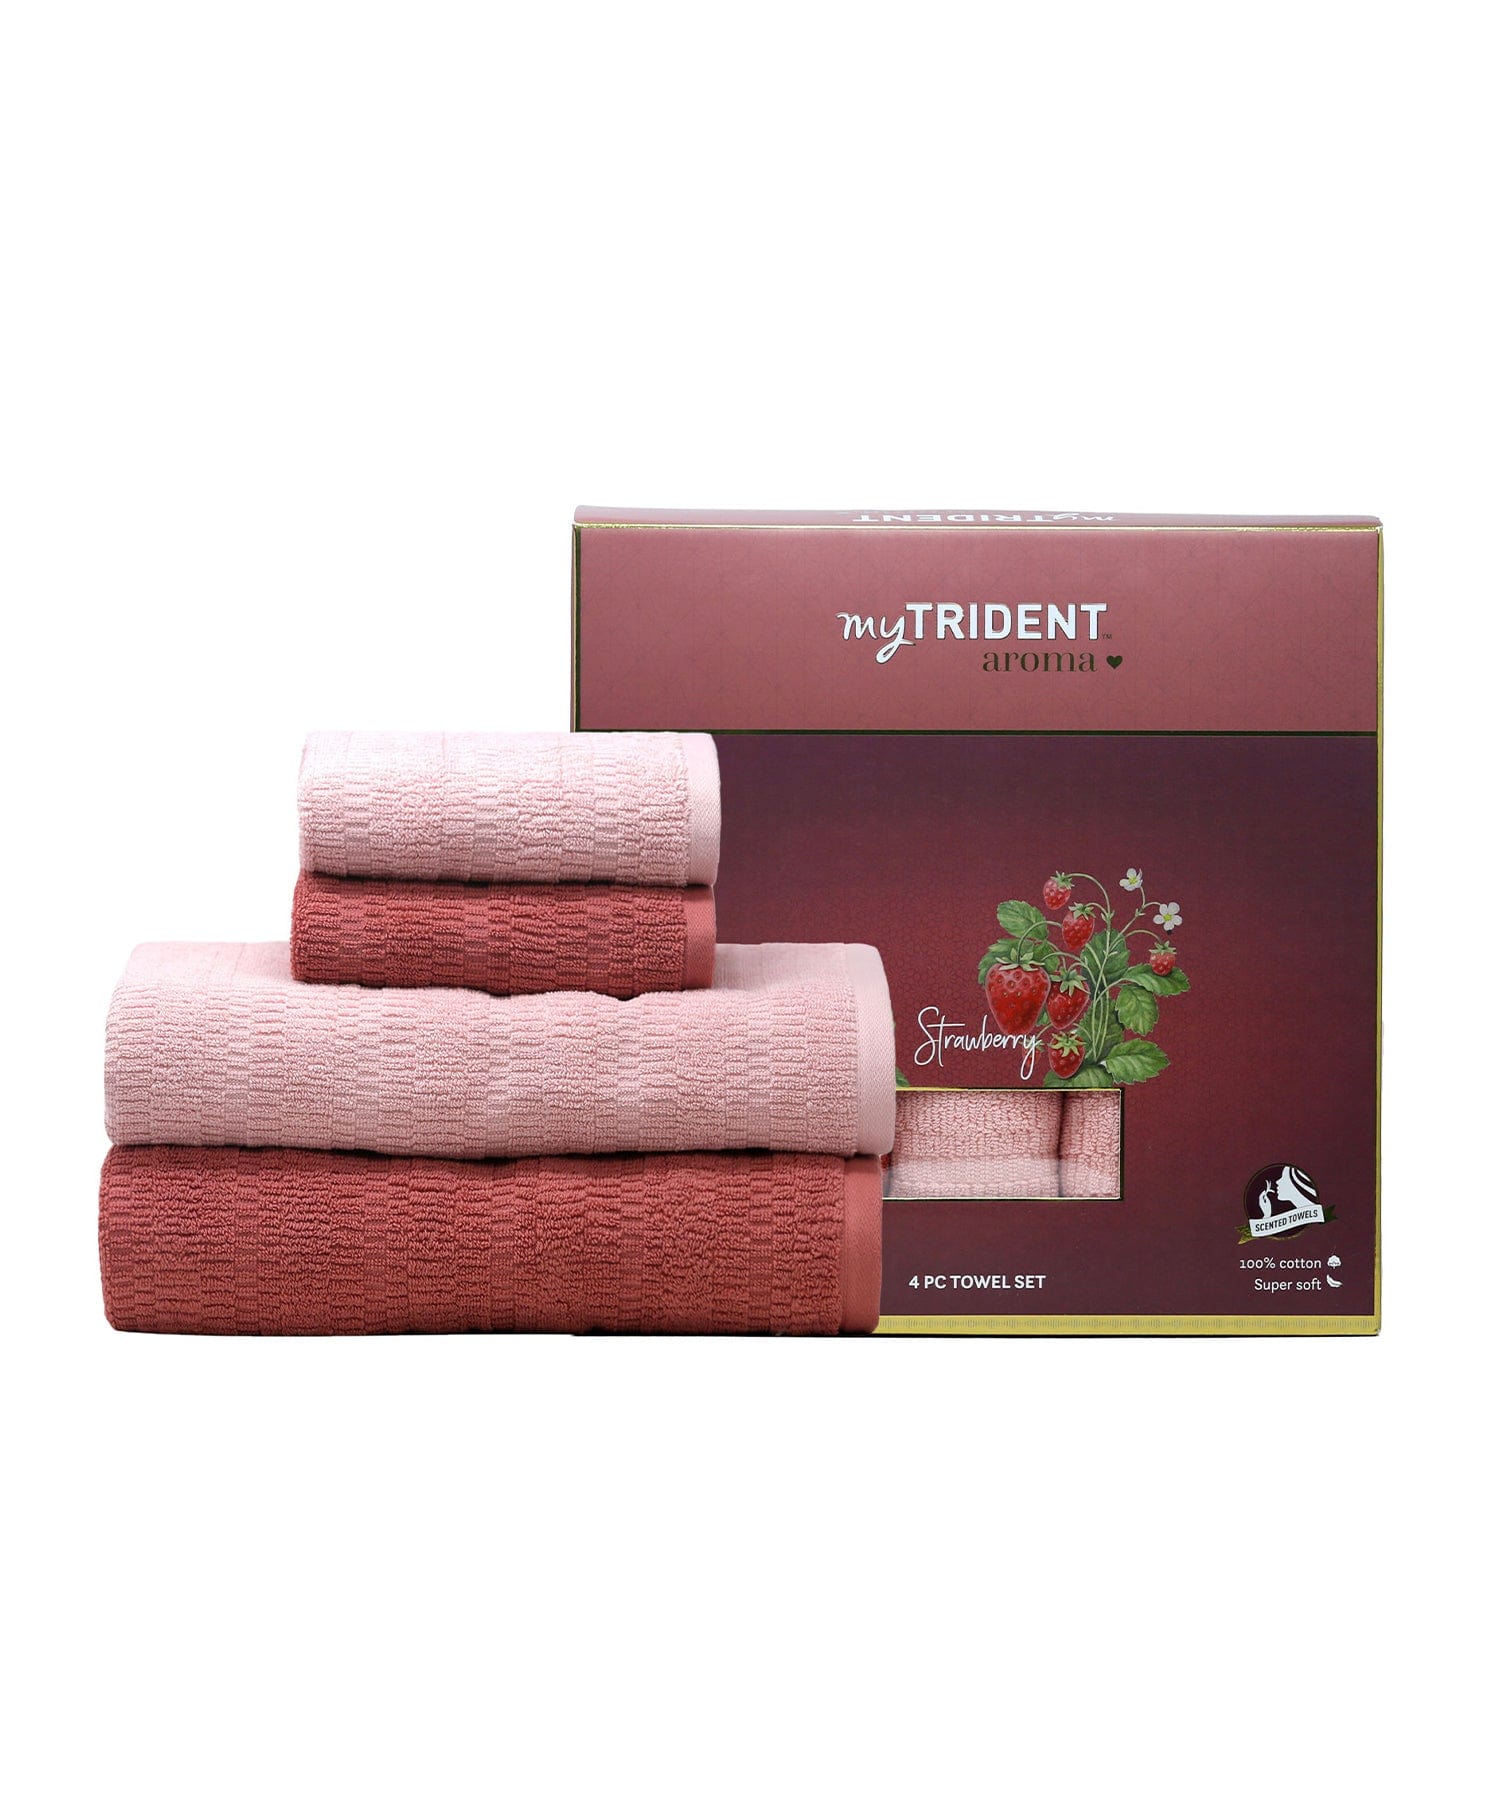 4Pc Towel Set ₹1759/-